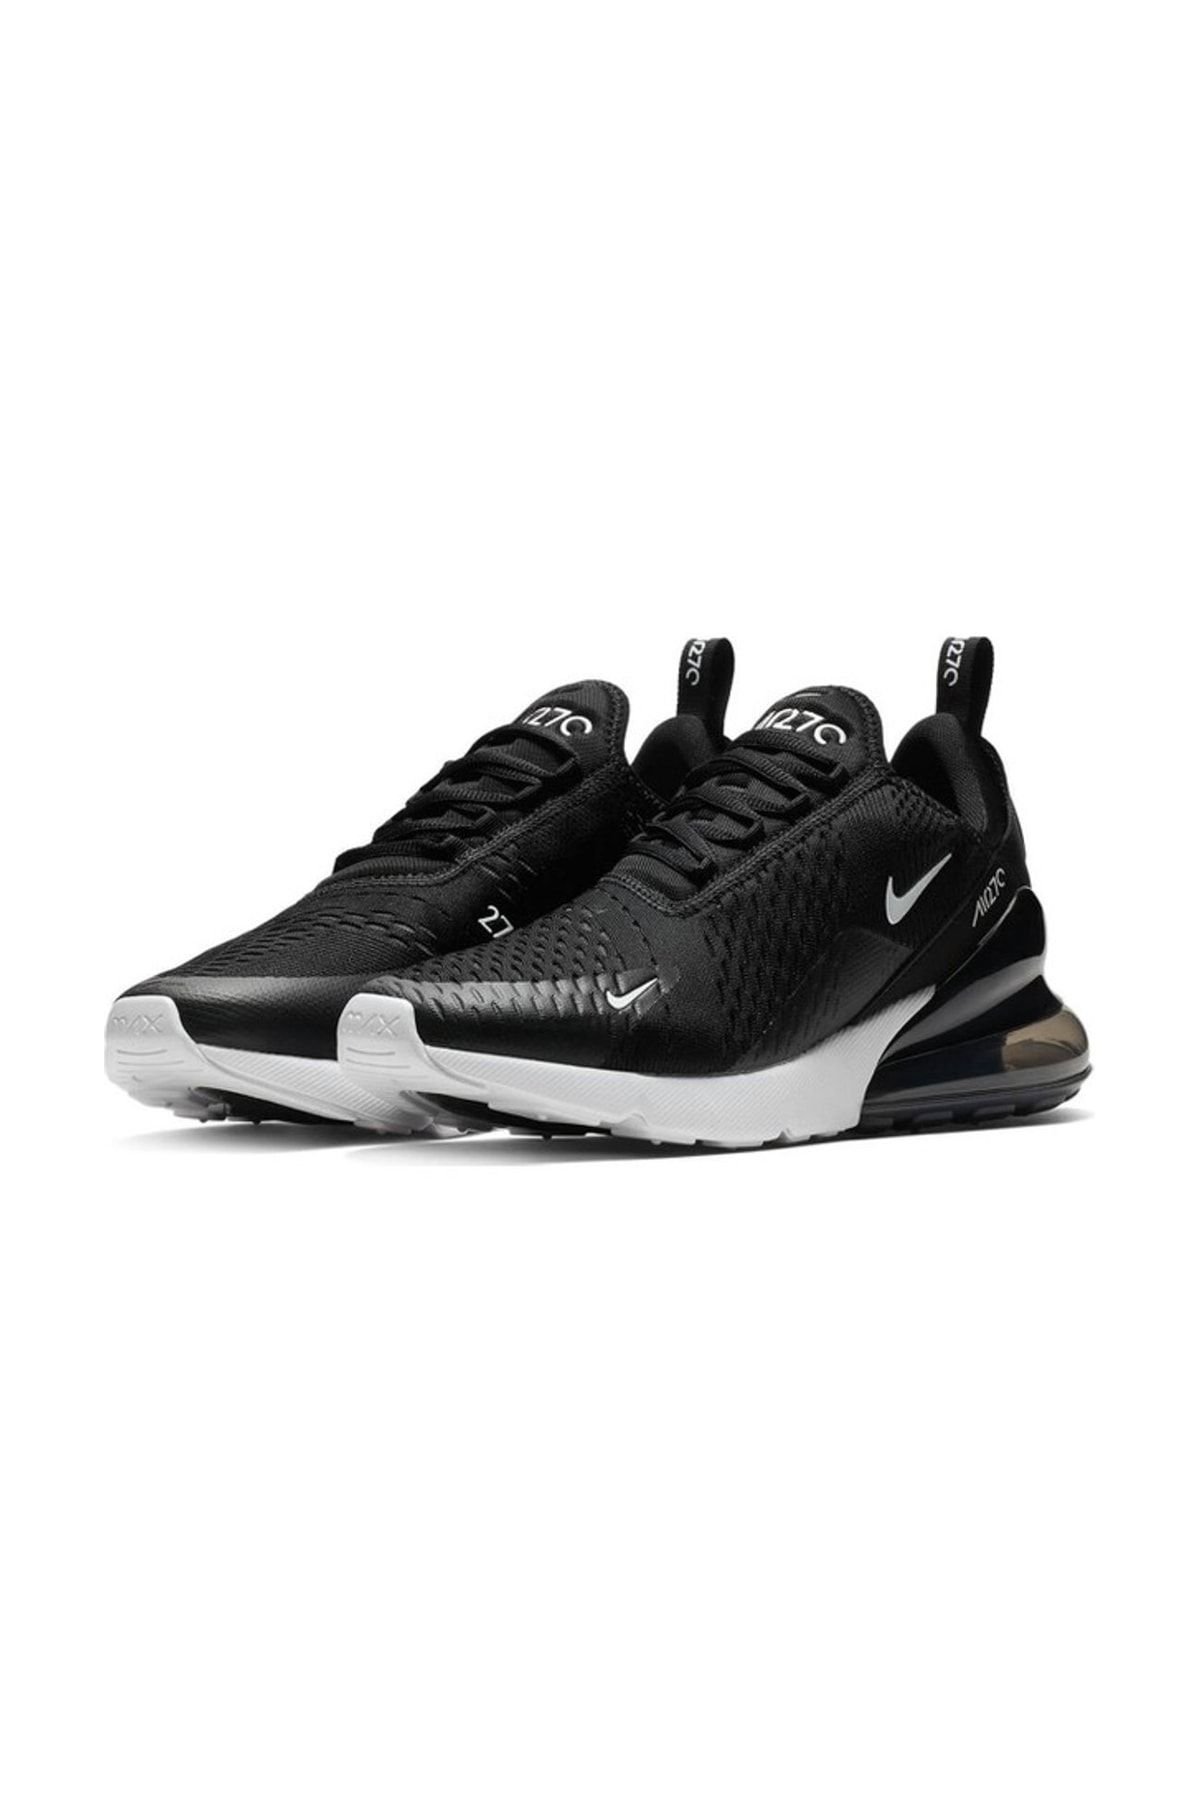 Nike 270 Sneaker Erkek Ayakkabı Ah8050-002 Siyah Beyaz